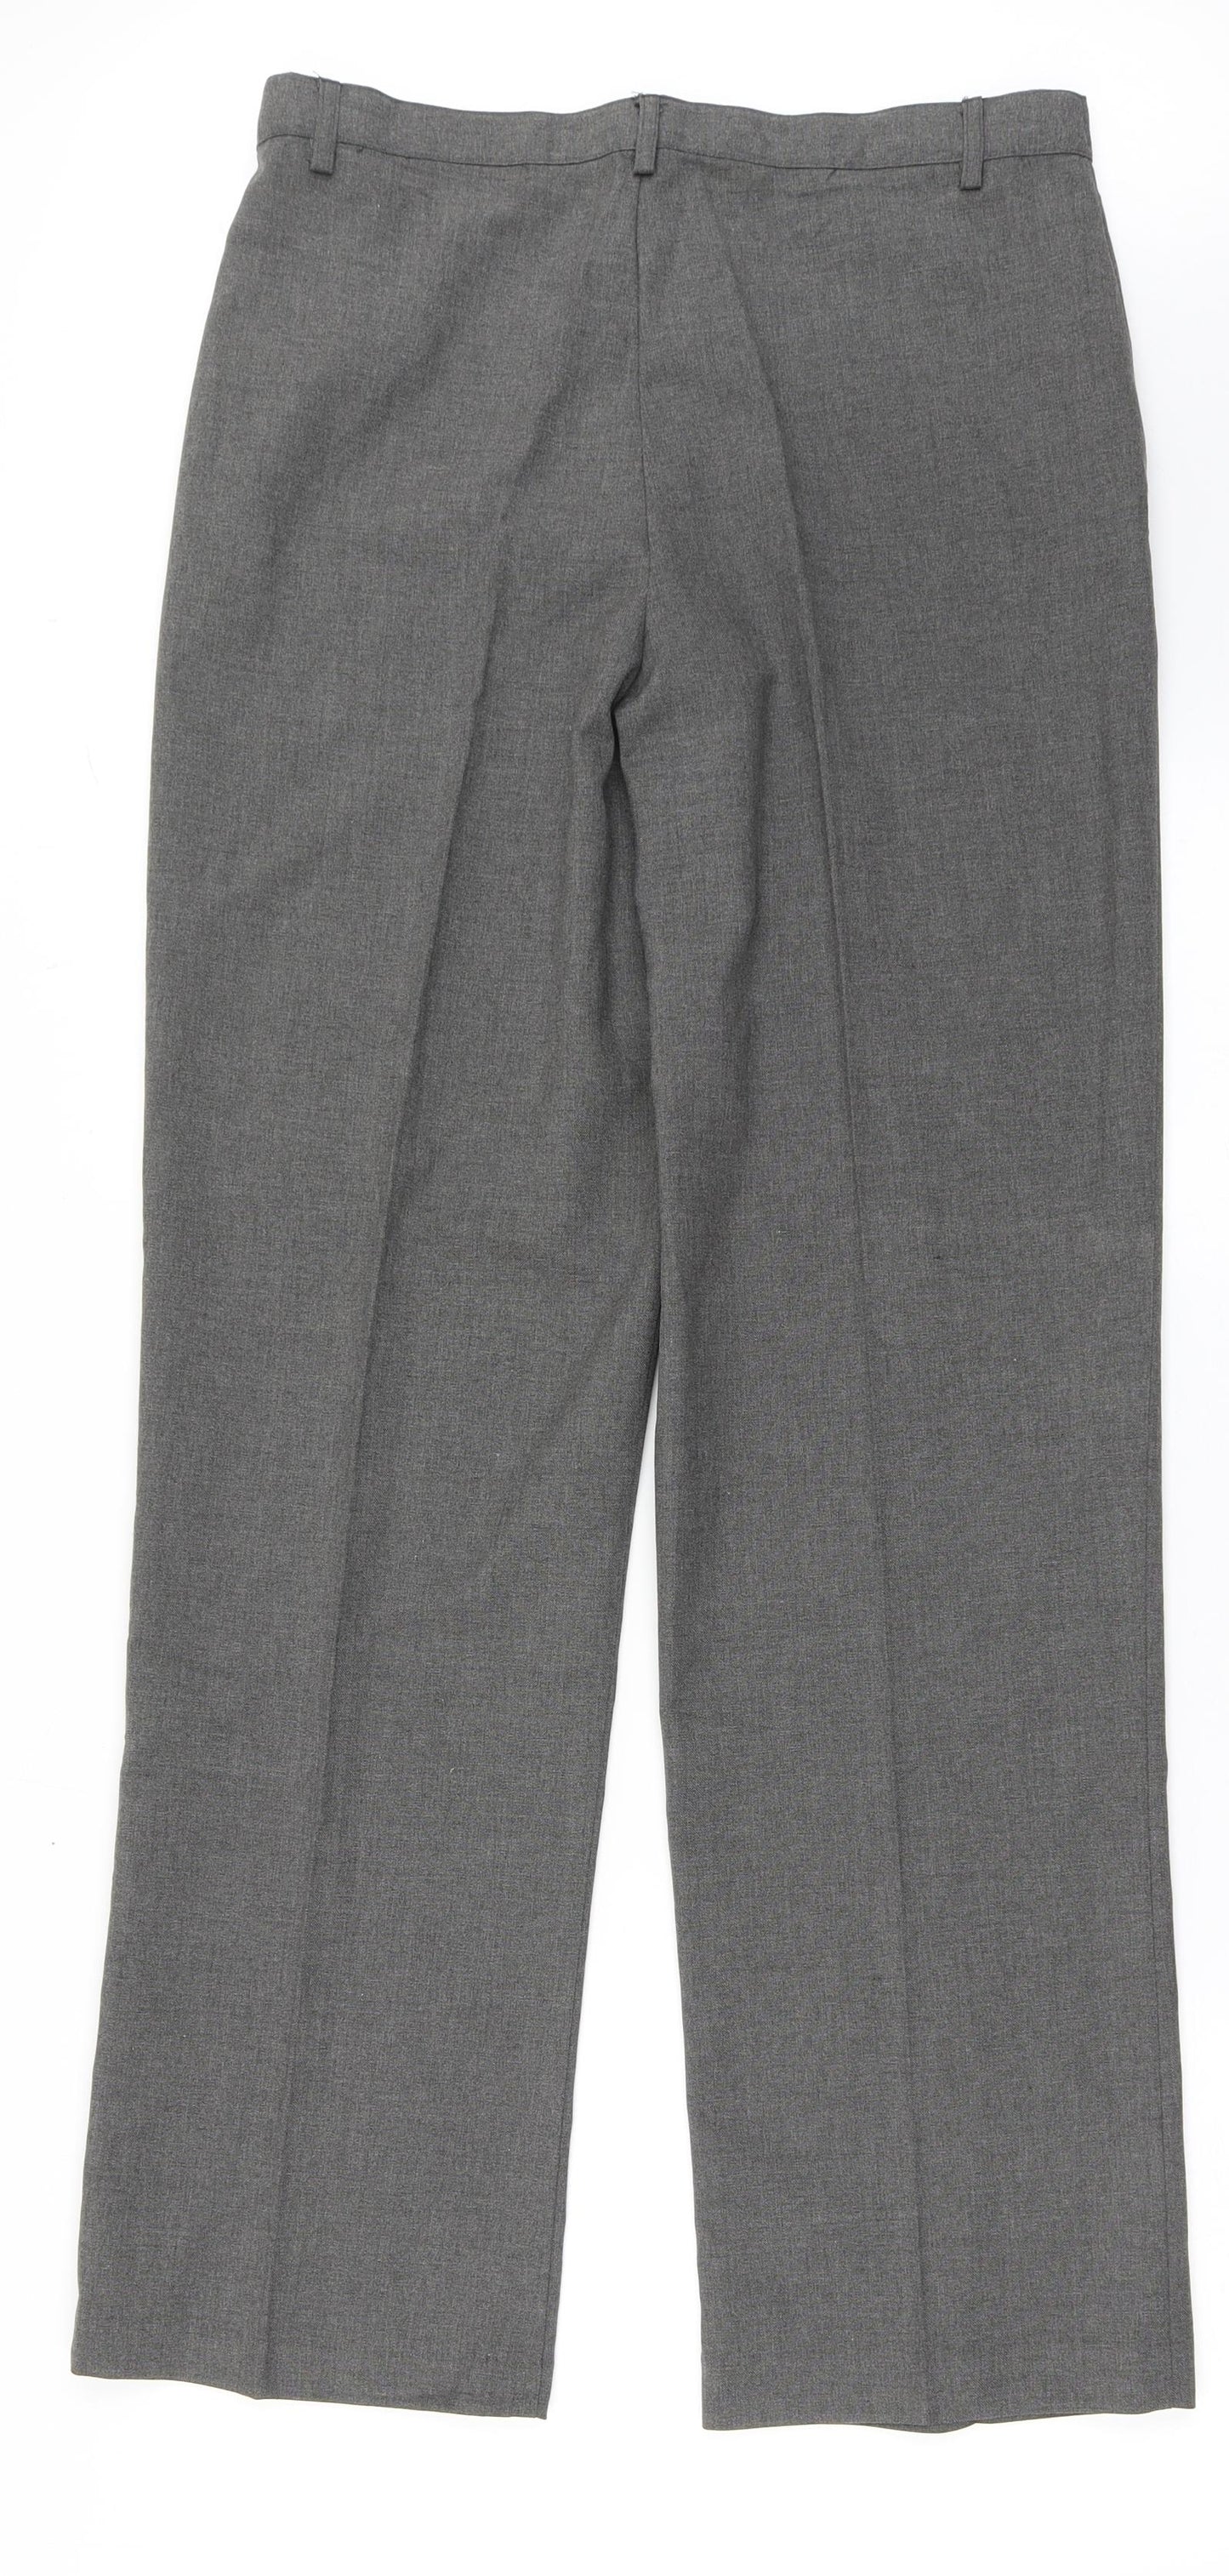 Debenhams Boys Grey  Polyester Dress Pants Trousers Size 16 Years  Regular Zip - School Wear